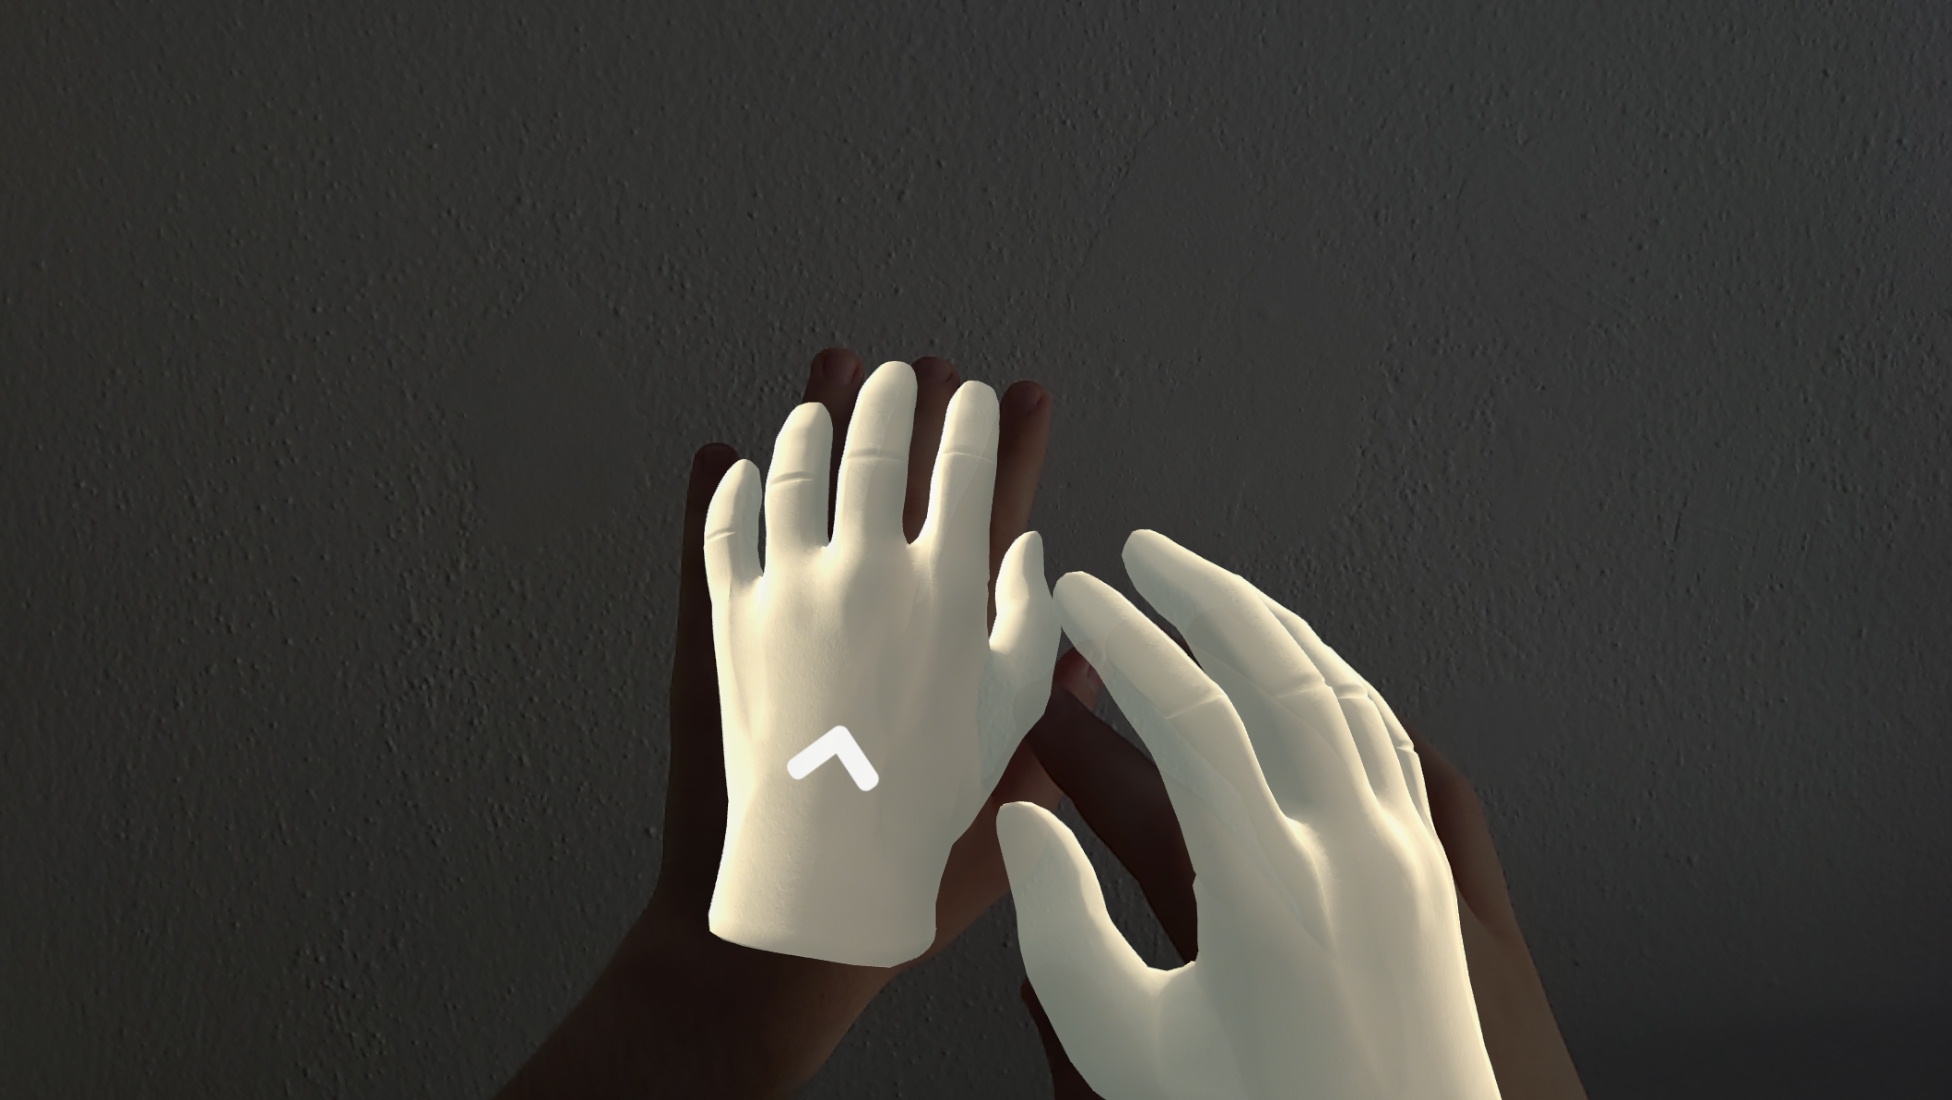 AR Hand movement hint